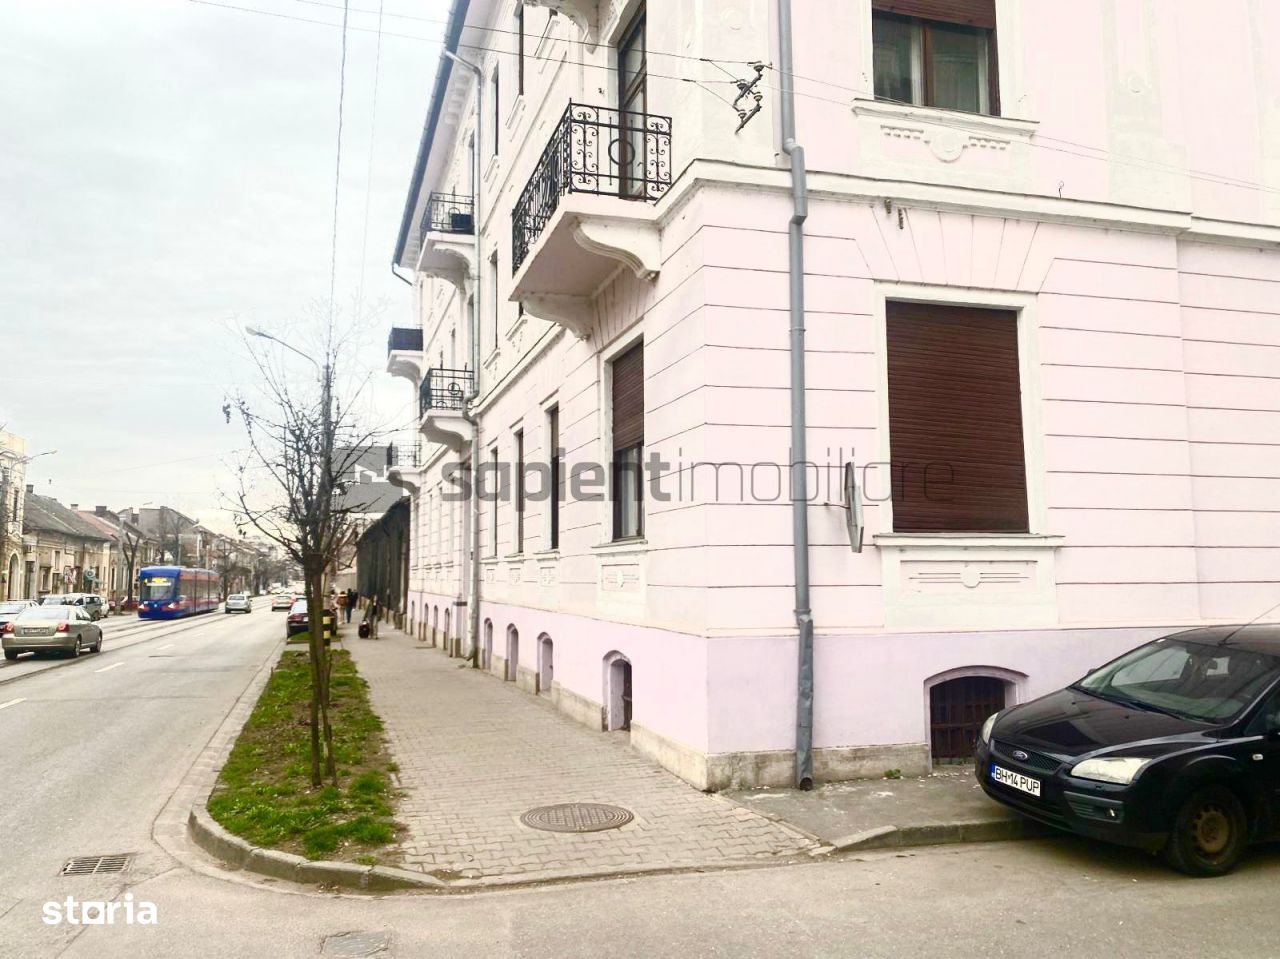 Apartament in Oradea pe strada Republicii